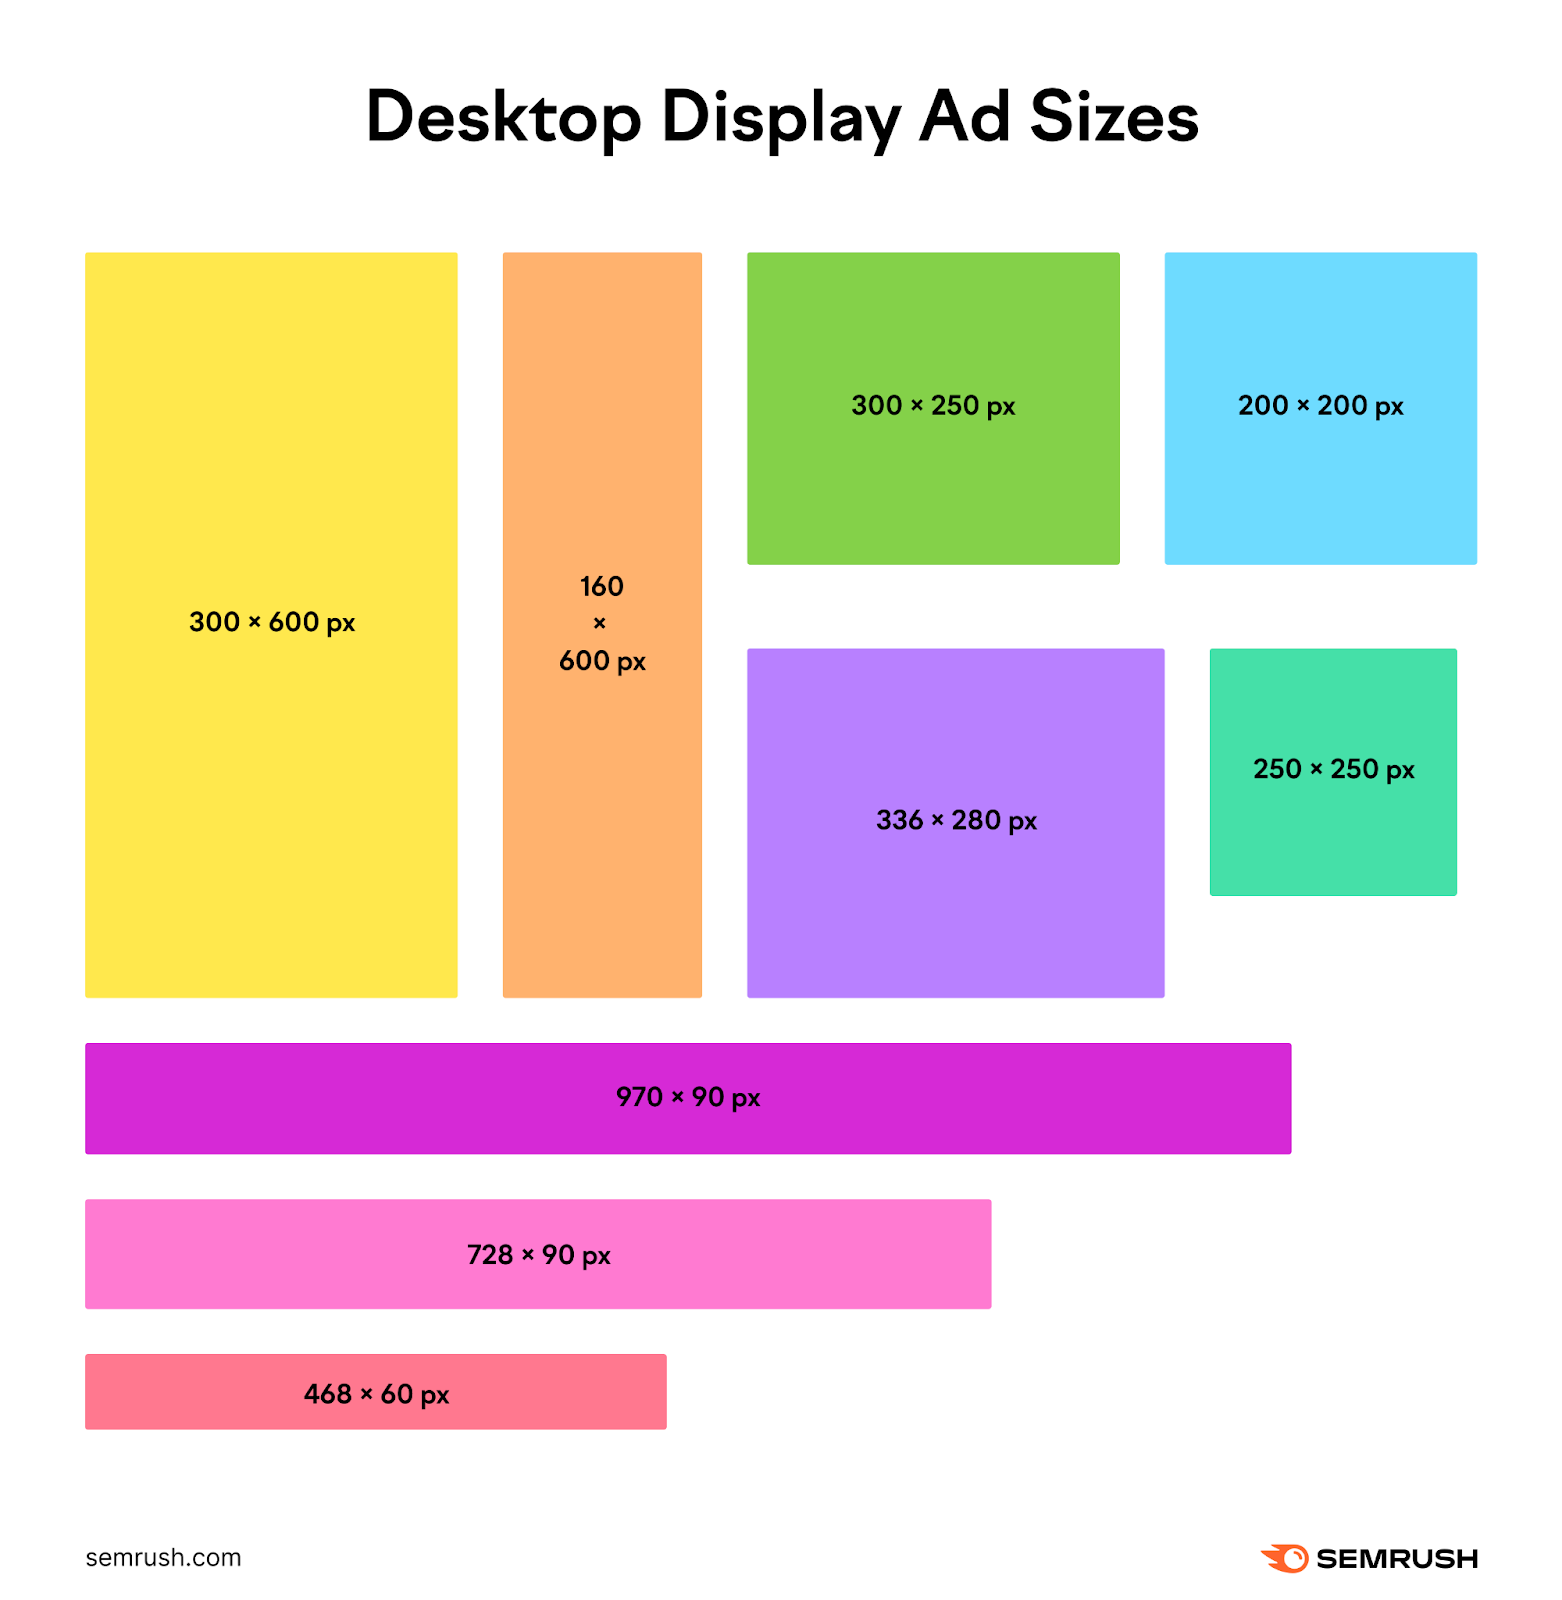 An image showing desktop display ad sizes